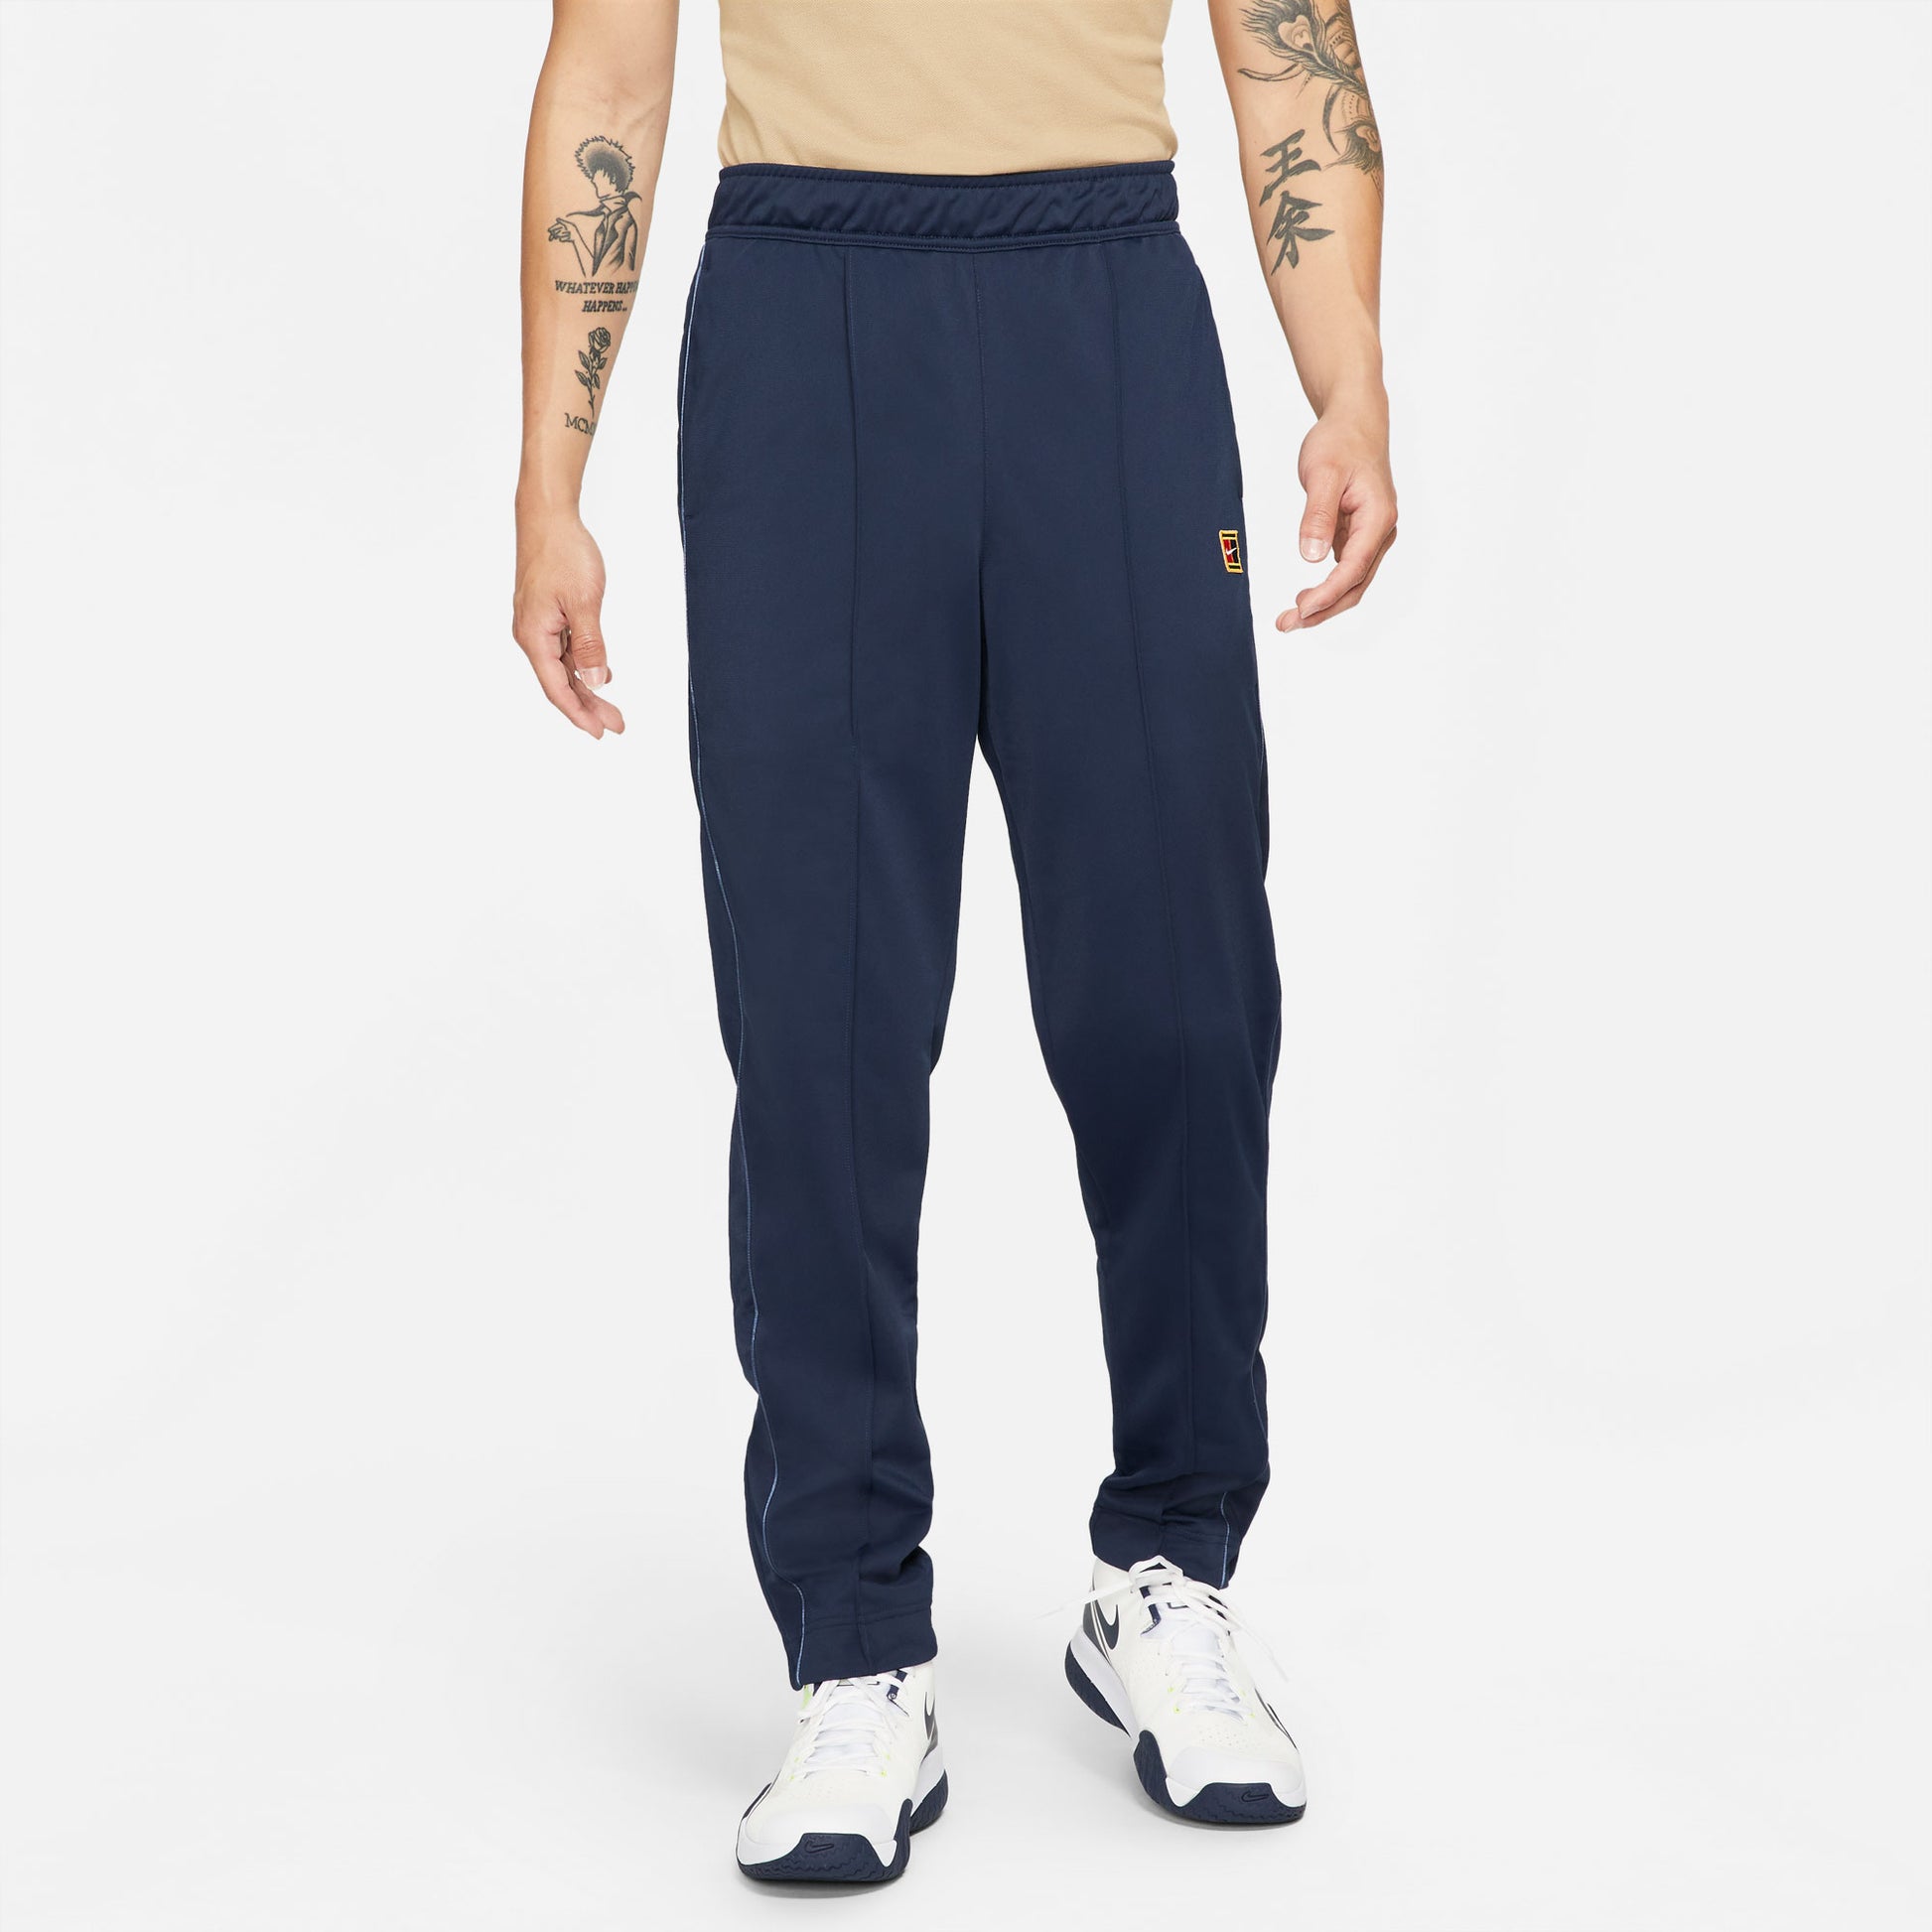 NikeCourt Heritage Men's Tennis Pants Blue (1)